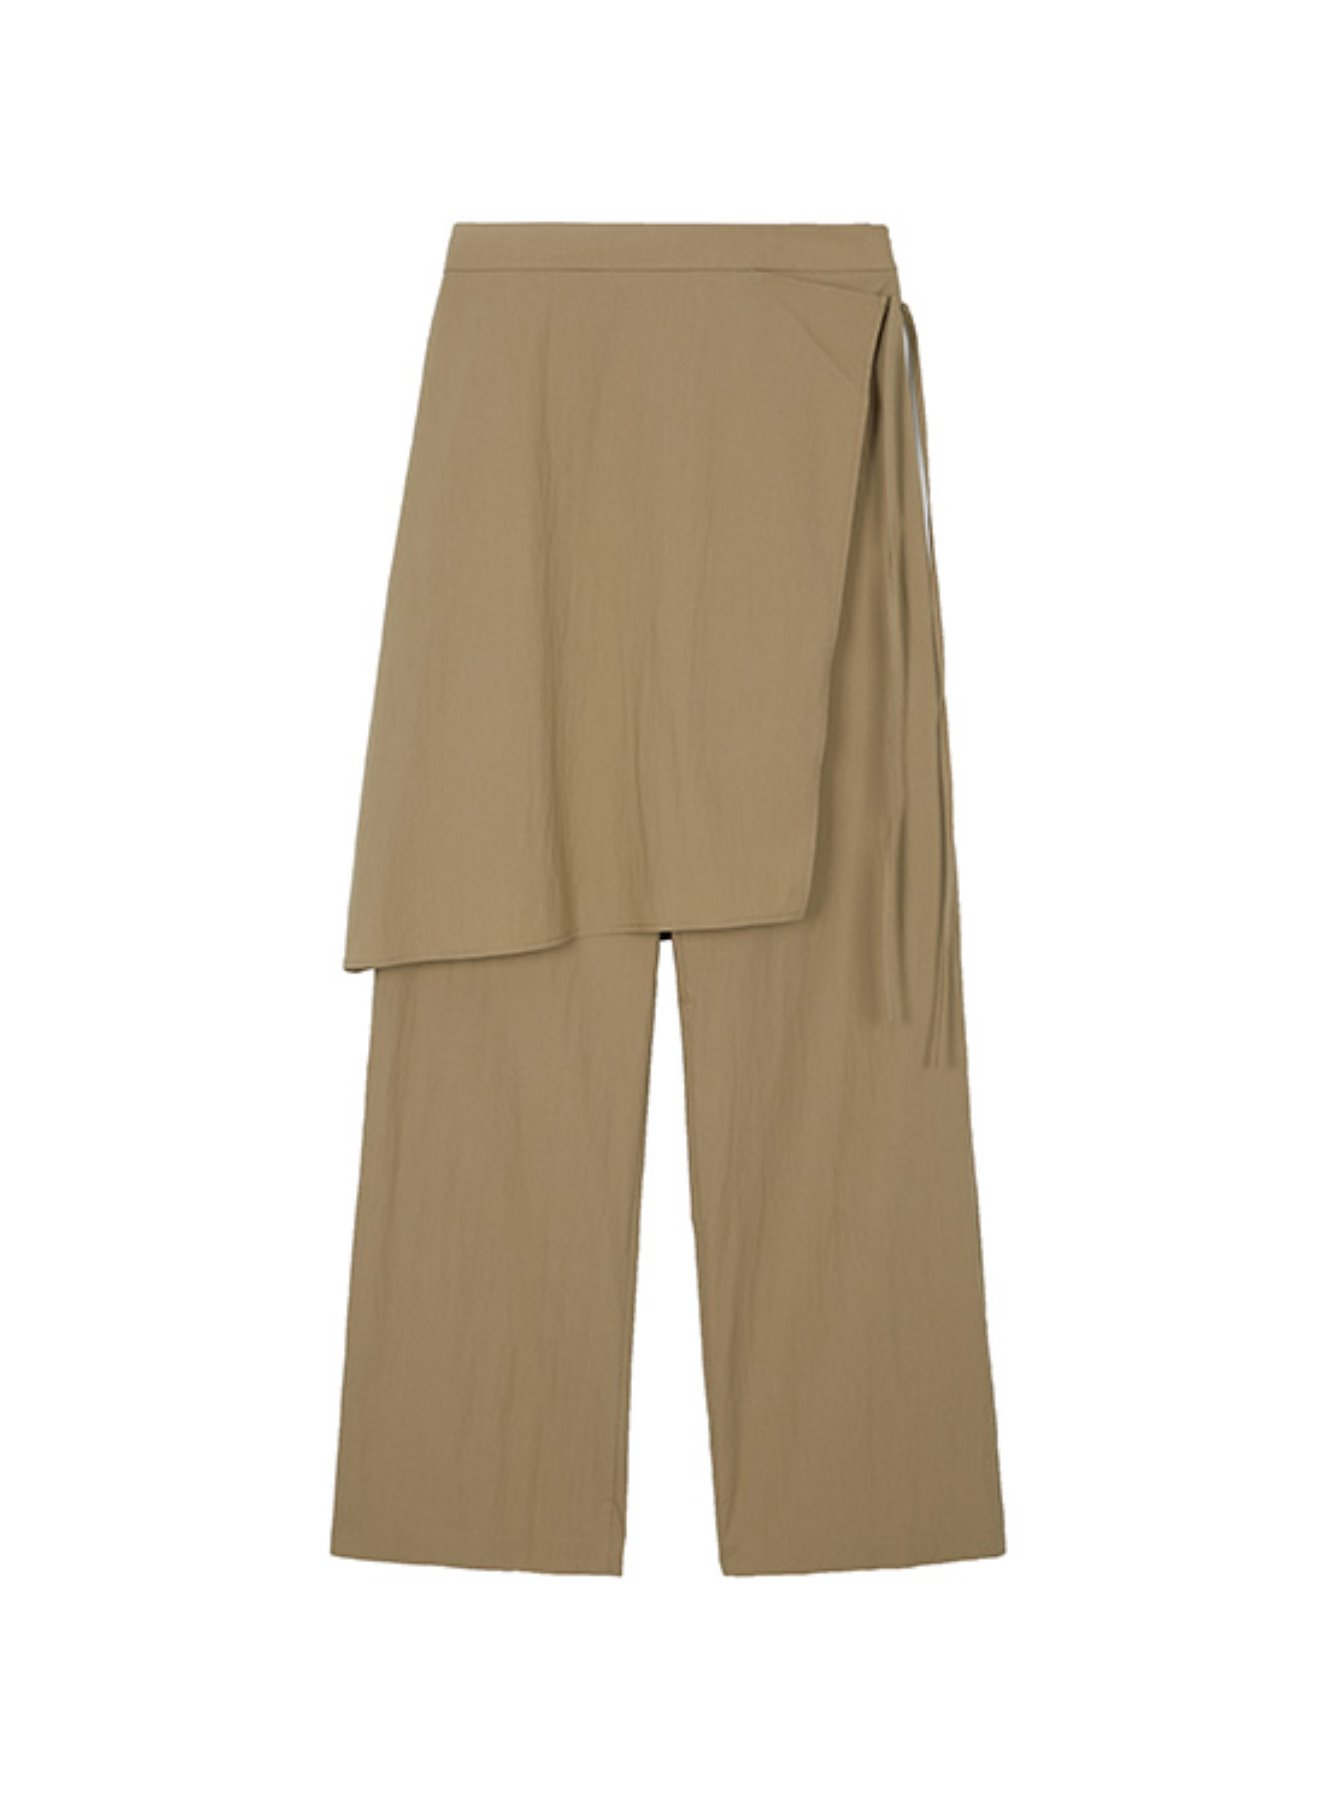 Wrap Skirt Layered Pants in Khaki VW2SL160-42